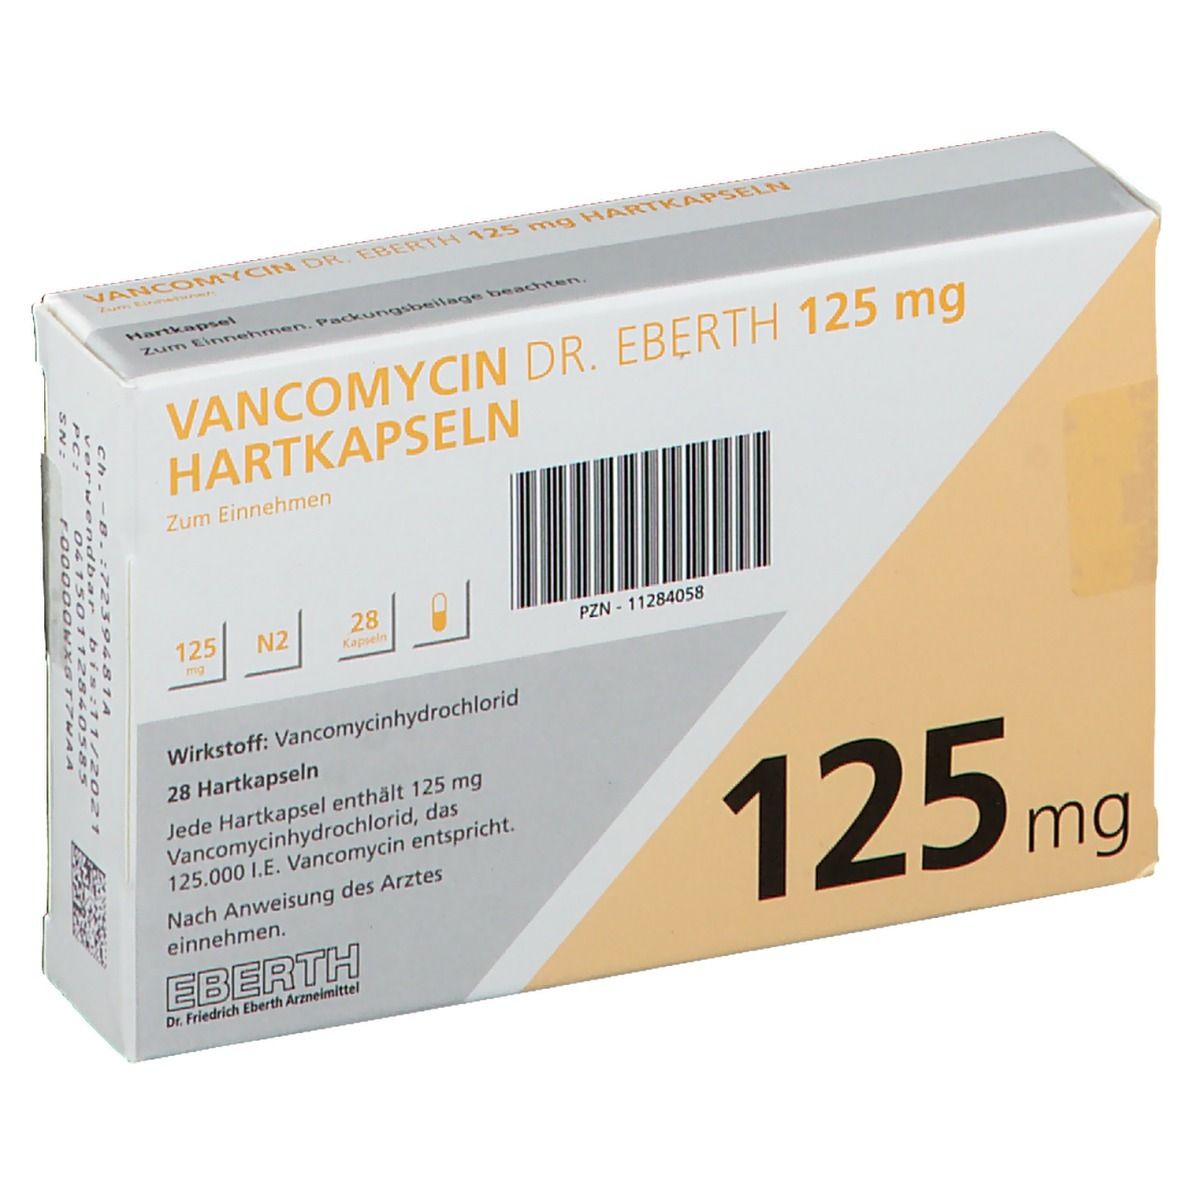 VANCOMYCIN DR. EBERTH 125 mg